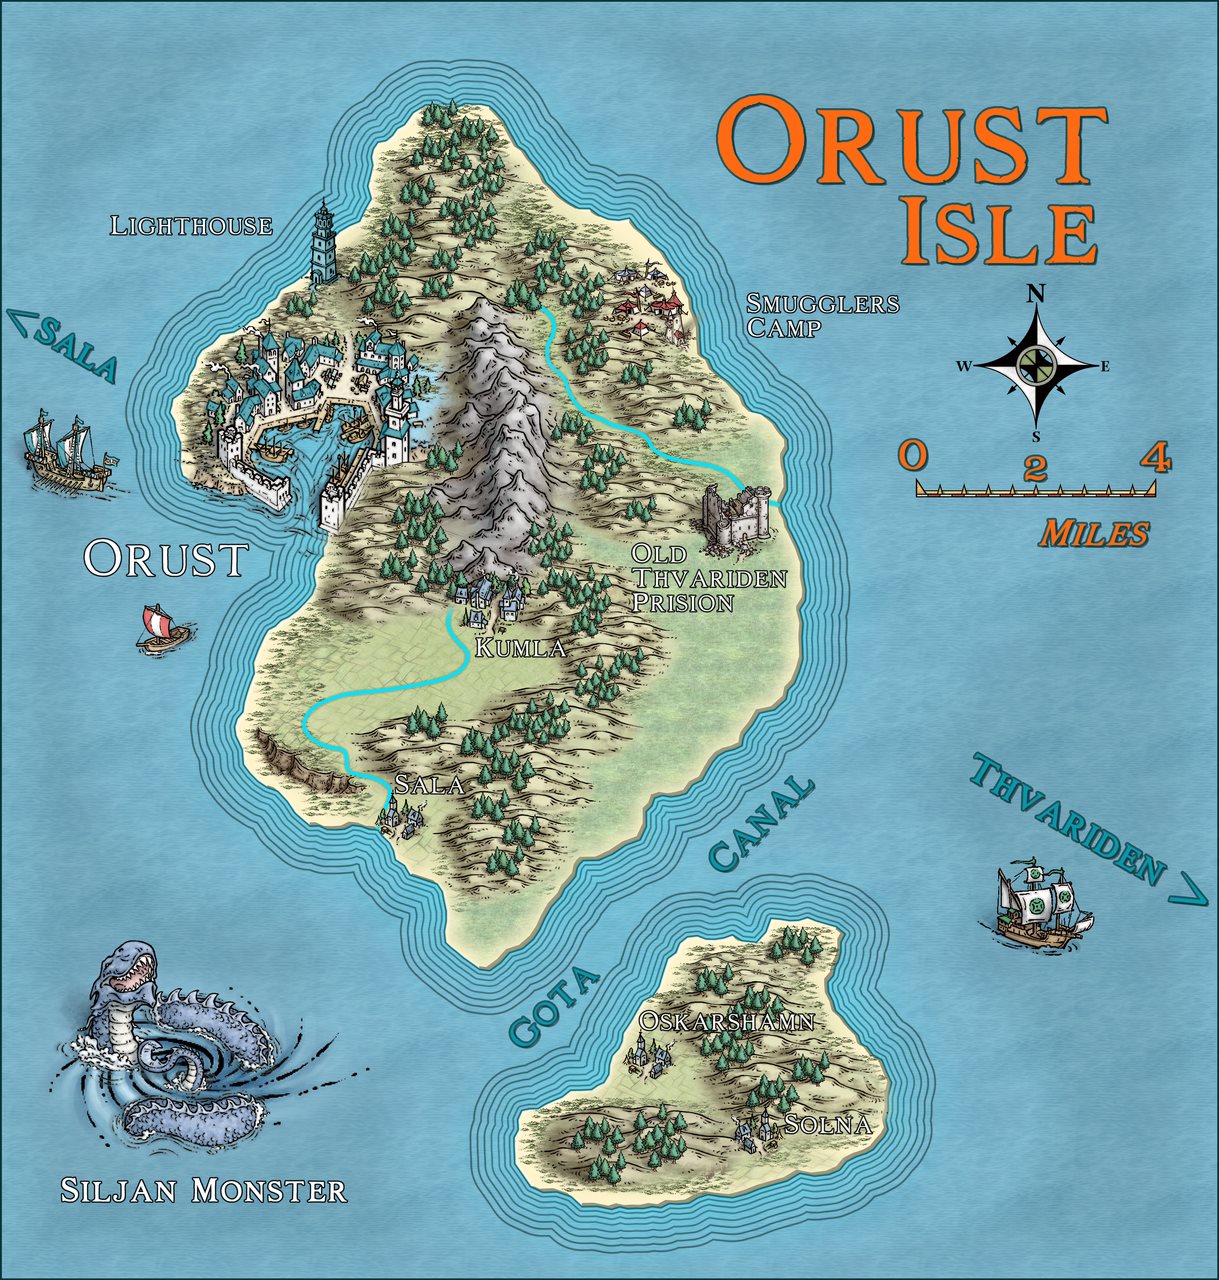 Nibirum Map: orust isle by Ricko Hasche